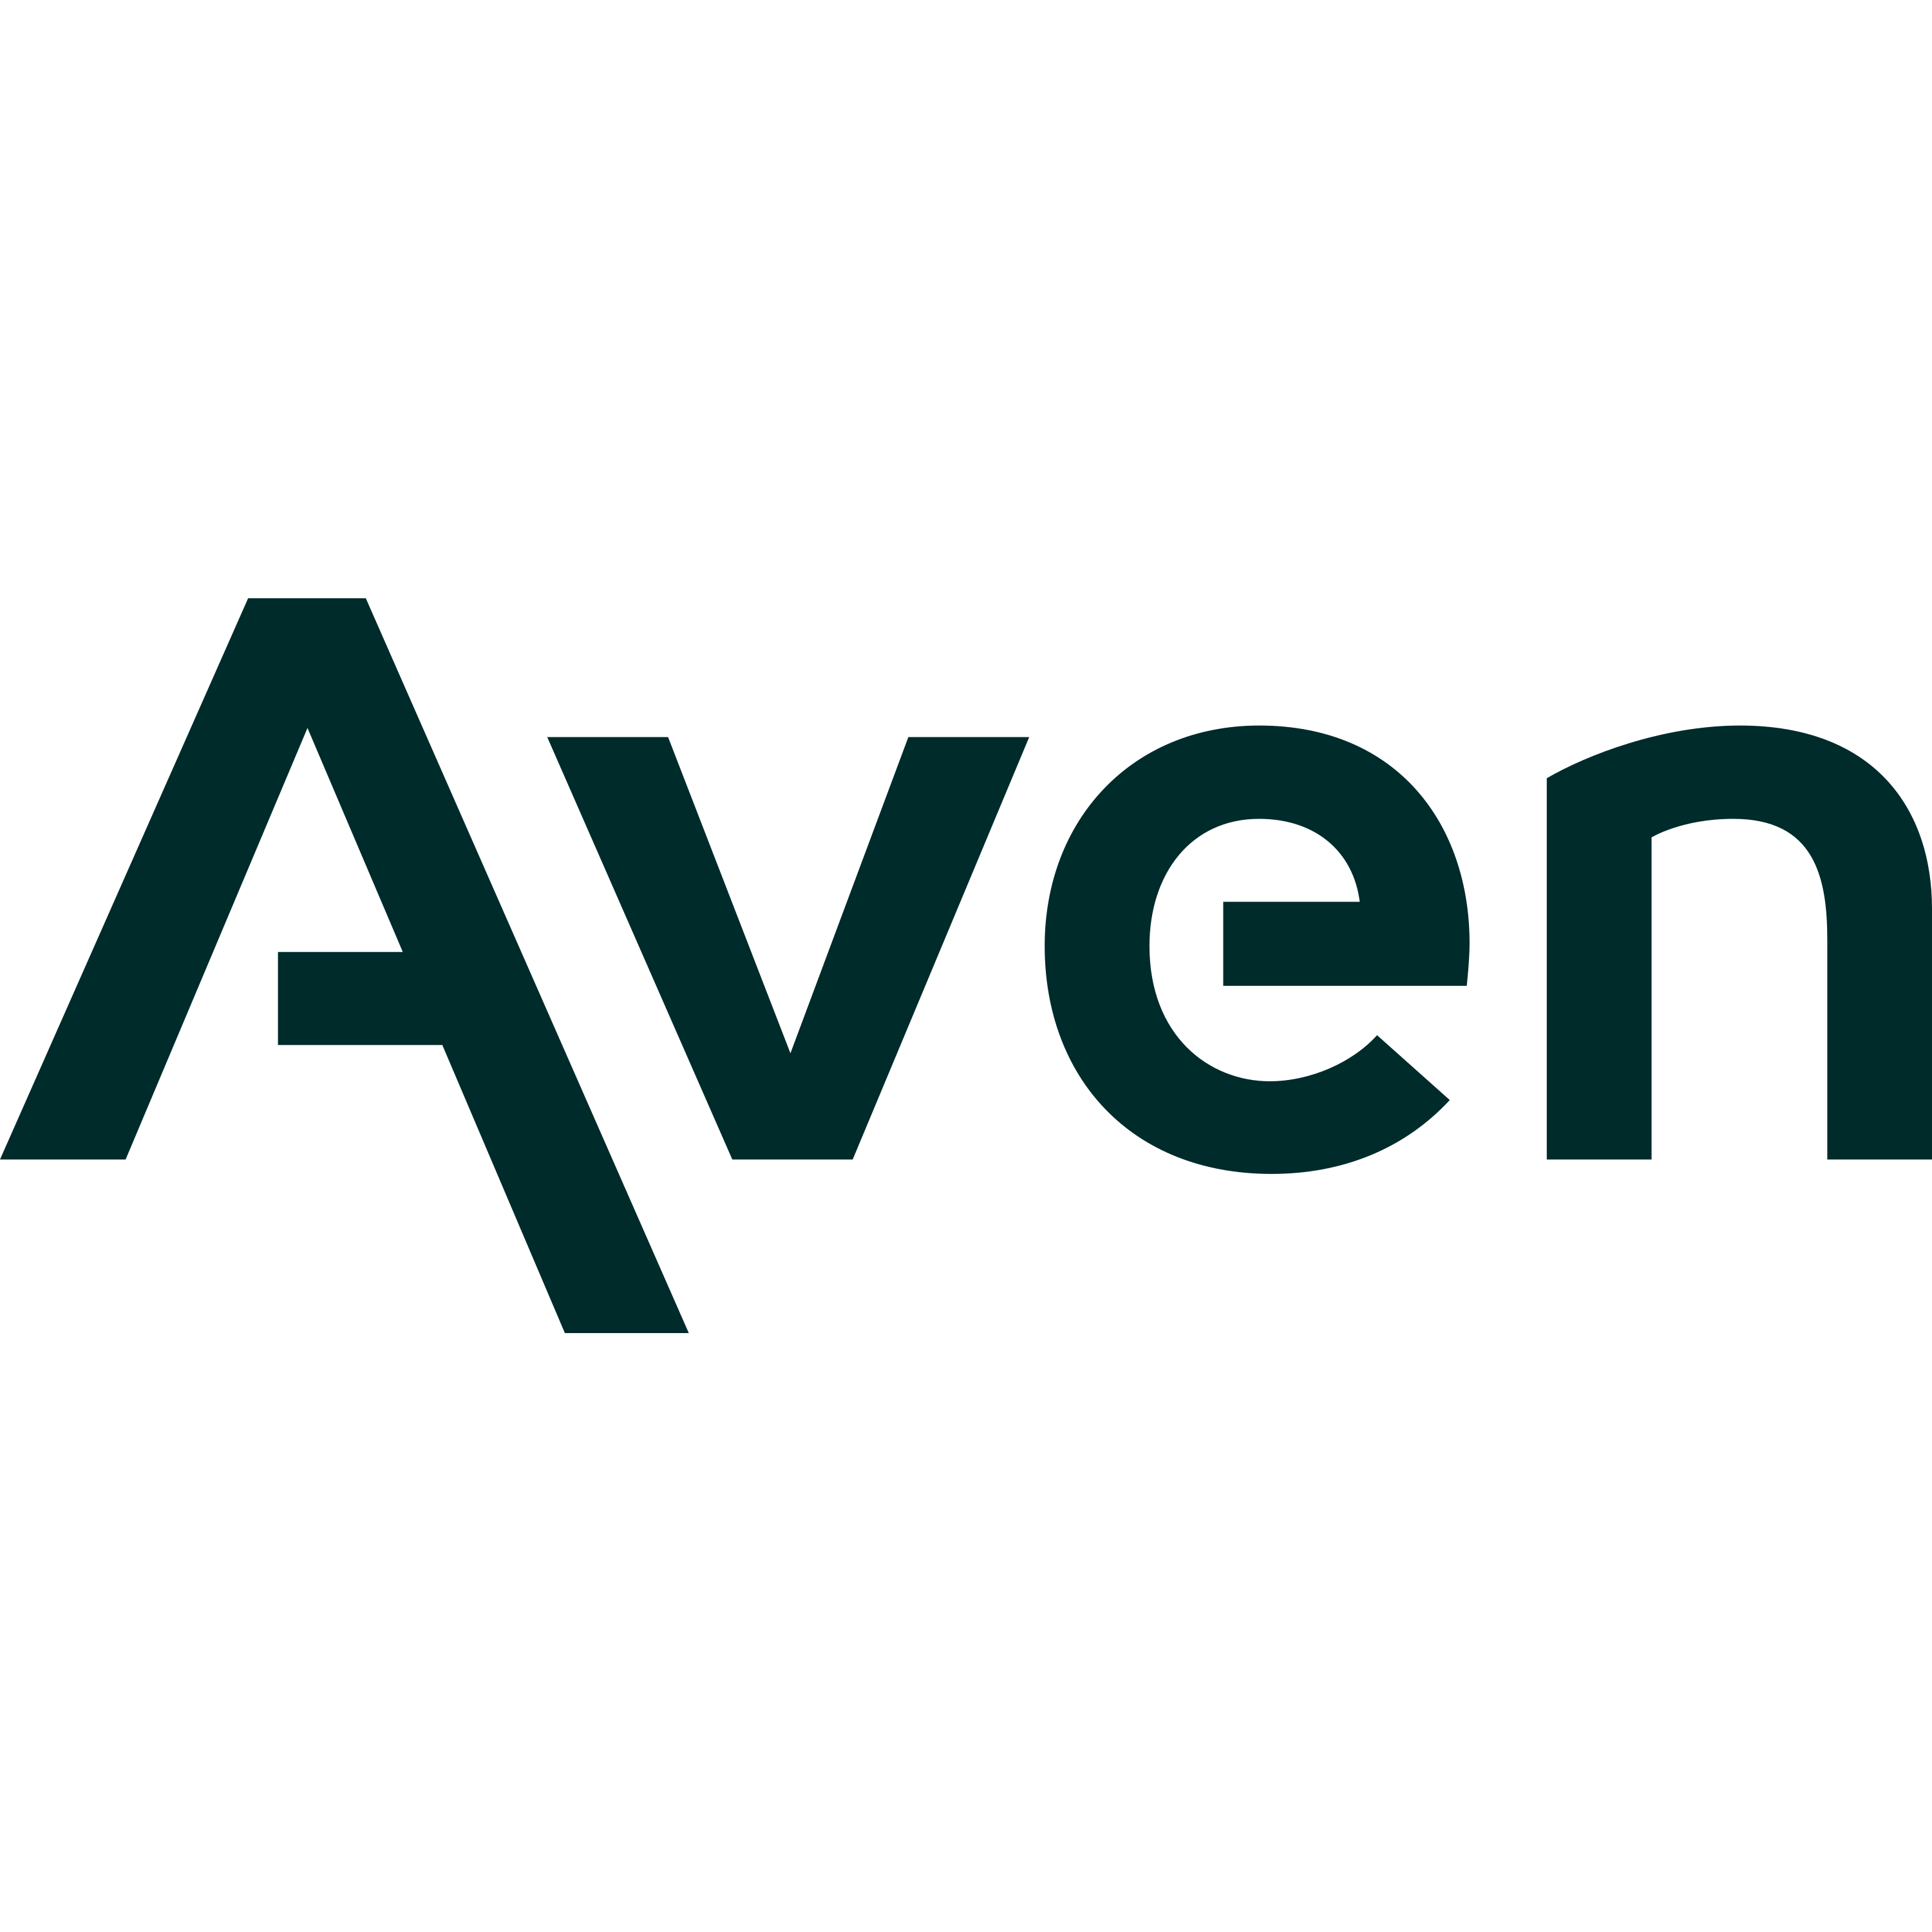 Aven Logo Transparent Picture